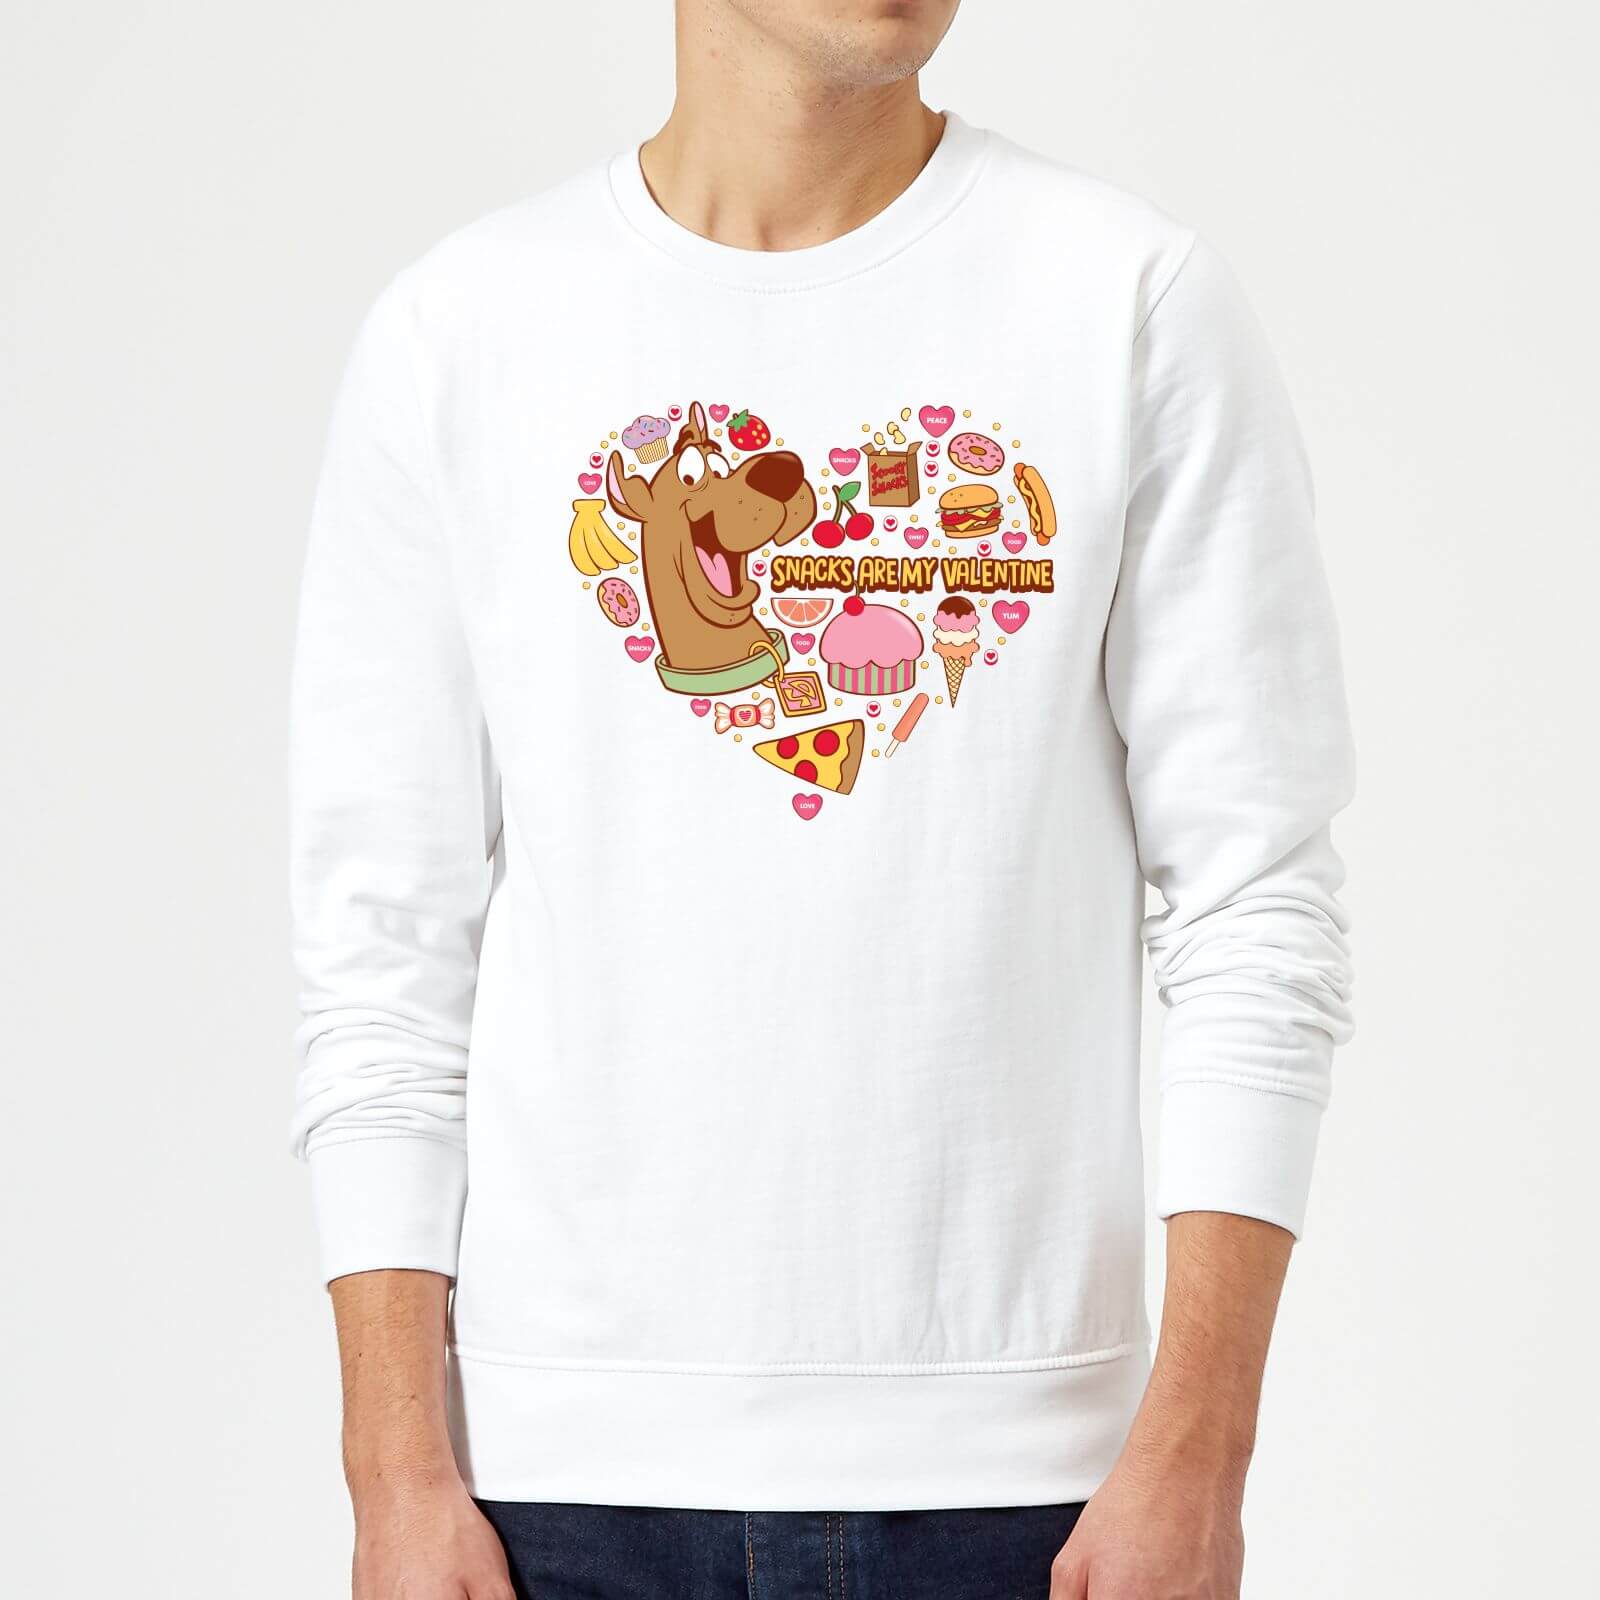 Scooby Doo Snacks Are My Valentine Sweatshirt - White - S - White